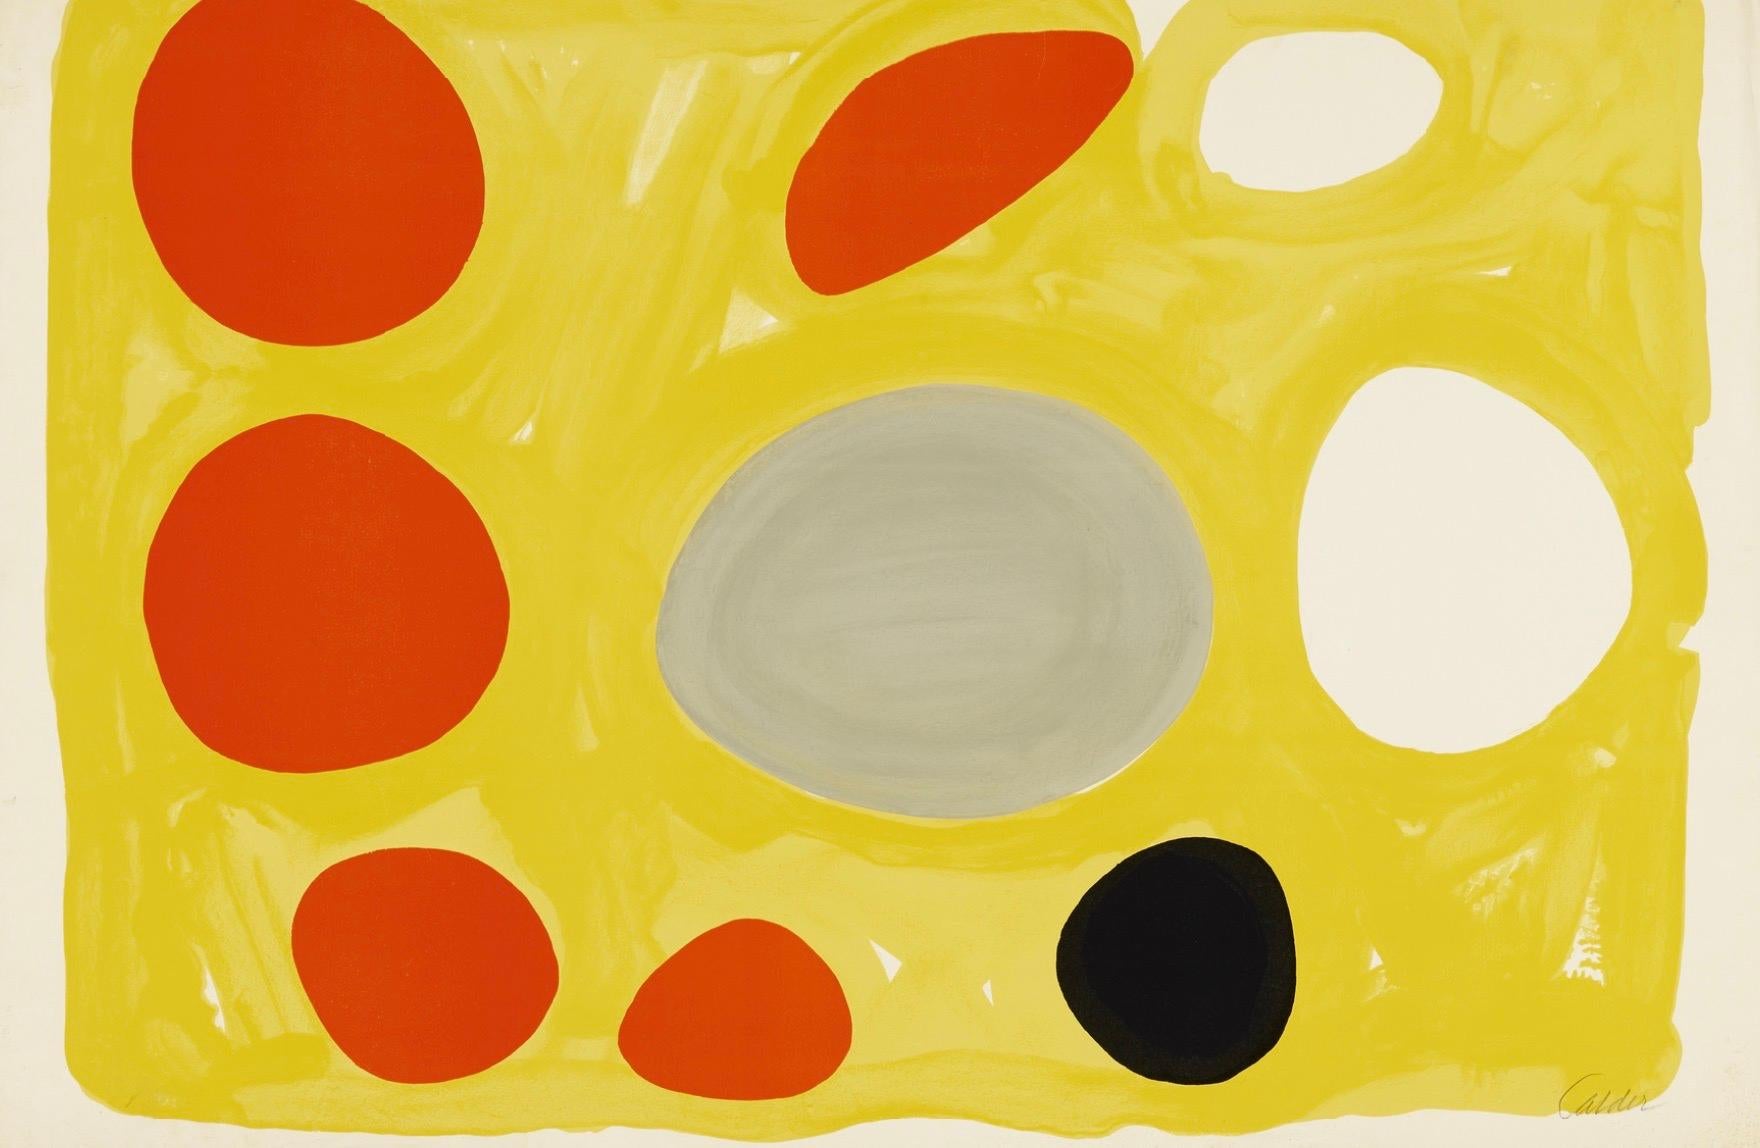 Grey Oval (Flat Mobile) - Print by Alexander Calder